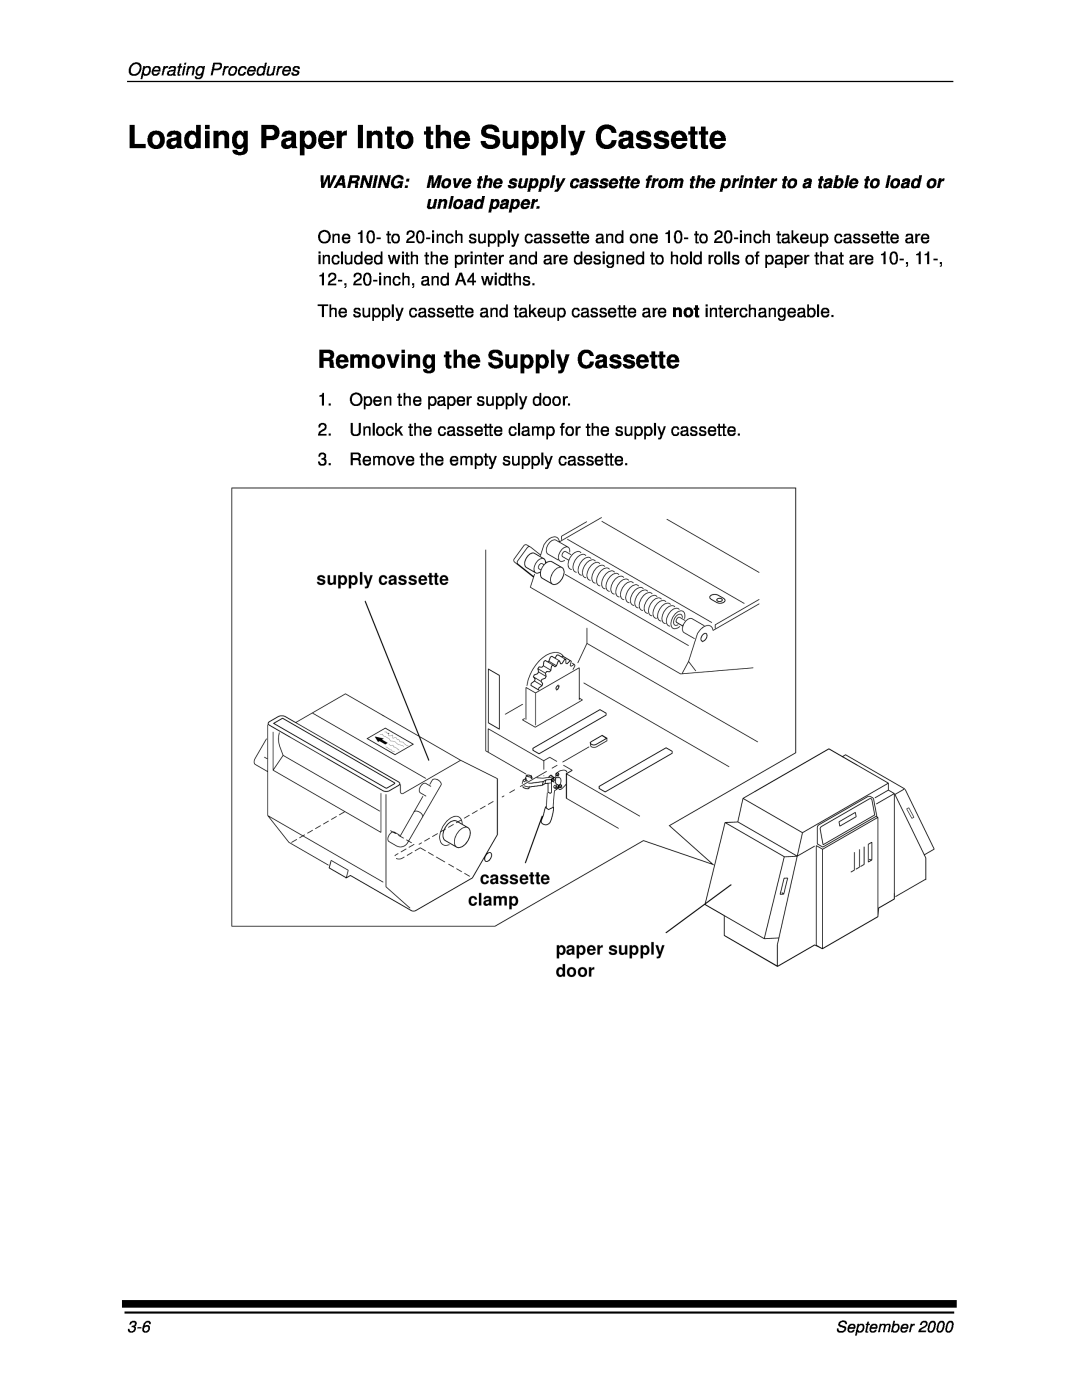 Kodak 20R manual Loading Paper Into the Supply Cassette, Removing the Supply Cassette, Operating Procedures 